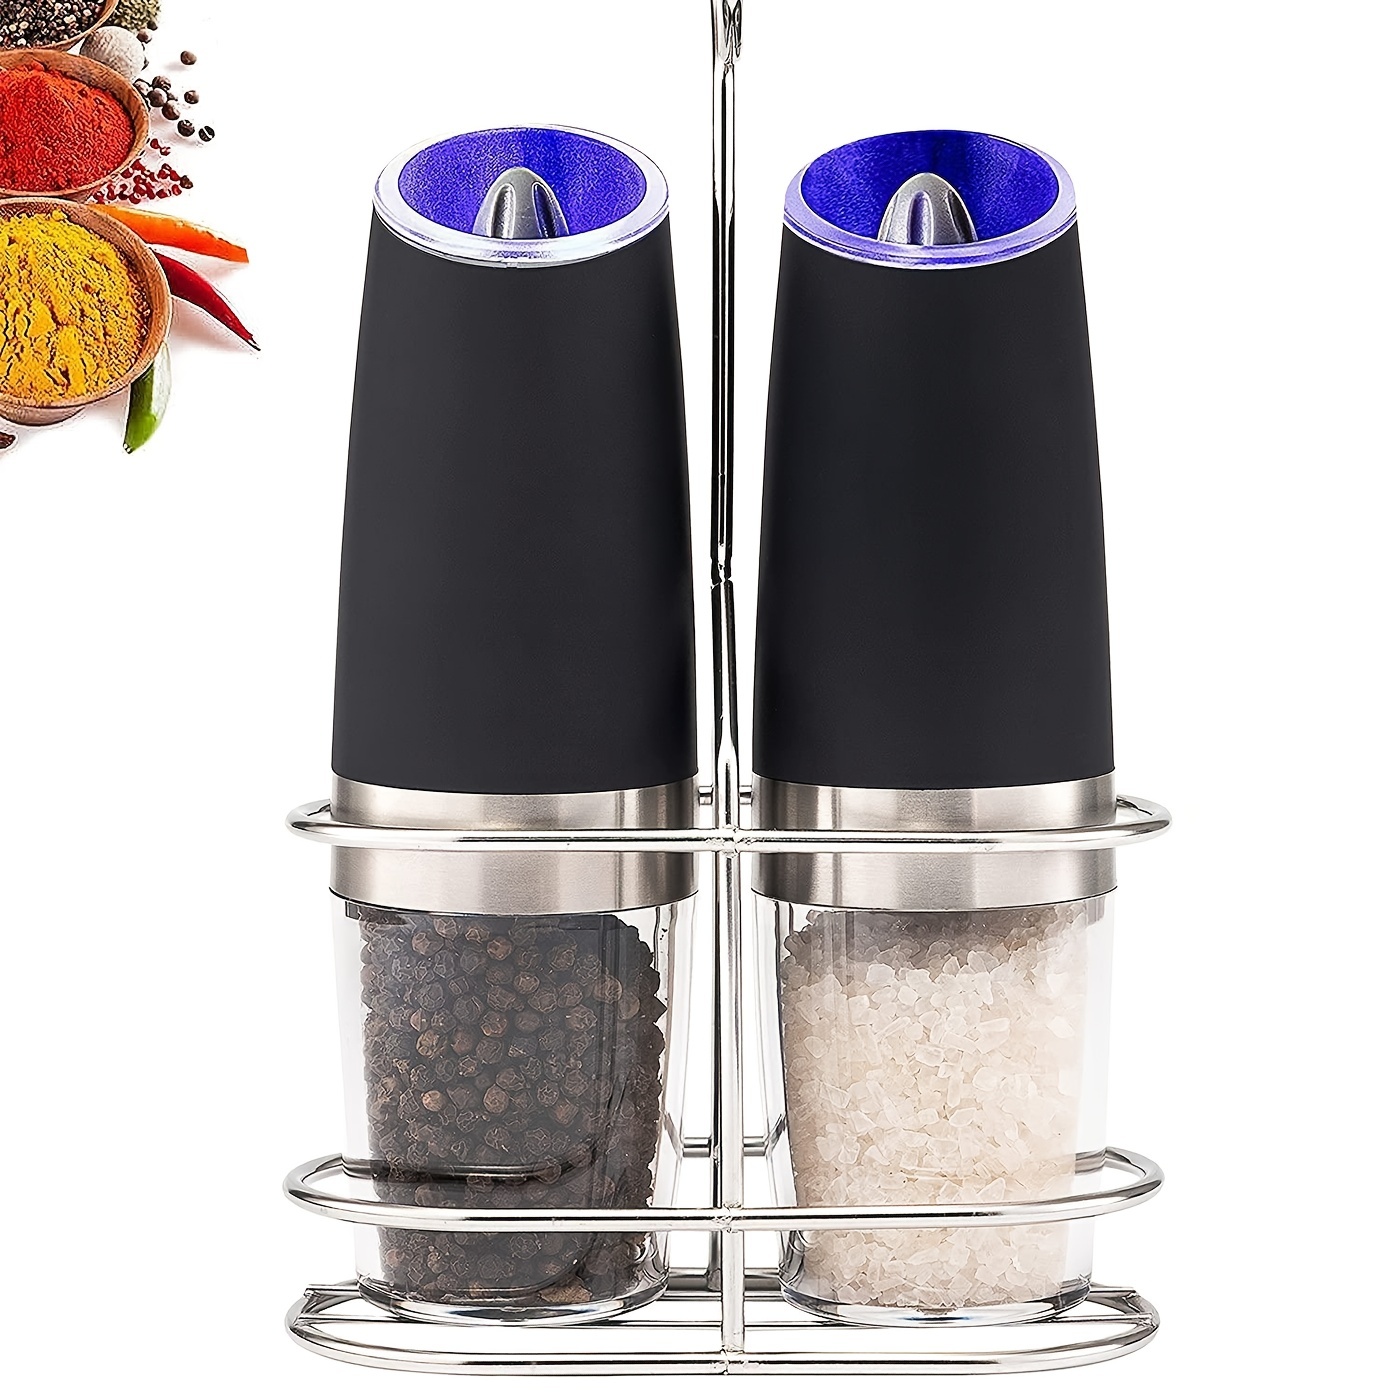 2PC Automatic Pepper Grinder USB Electric Rechargeable Salt Spices